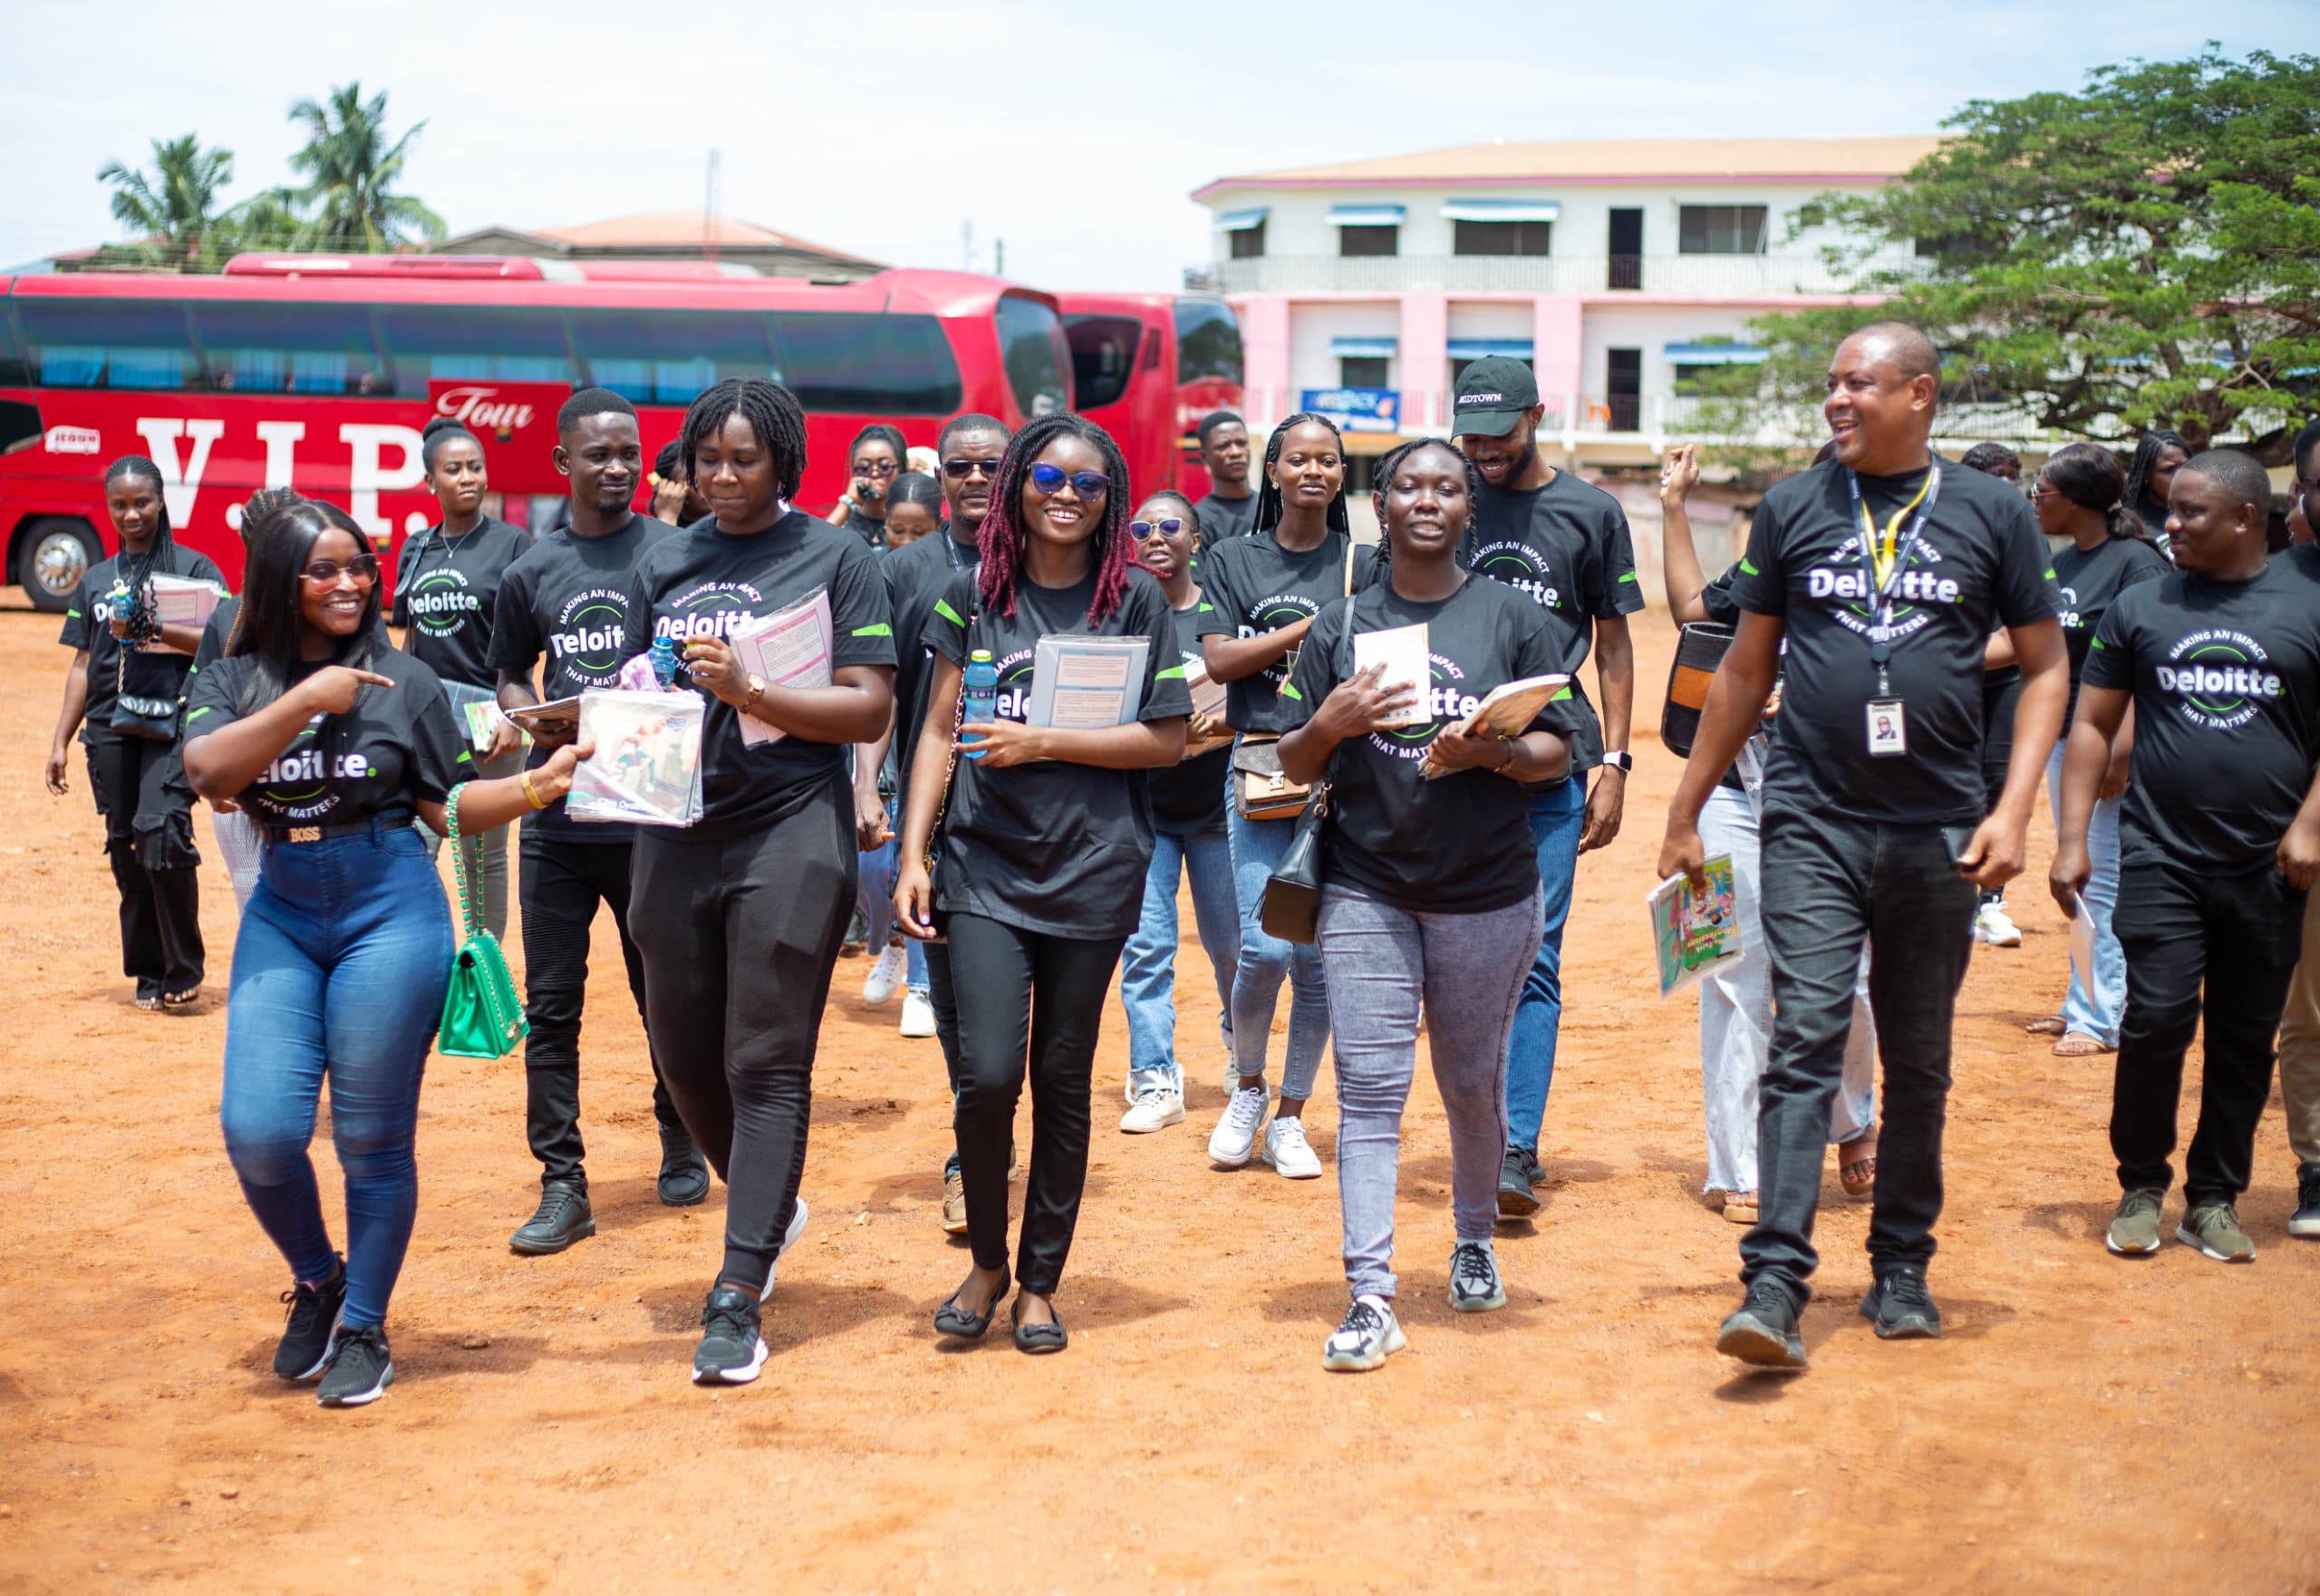 Over 400 Deloitte Ghana staff mark Volunteer Day to impact about 12,000 school children [Video]